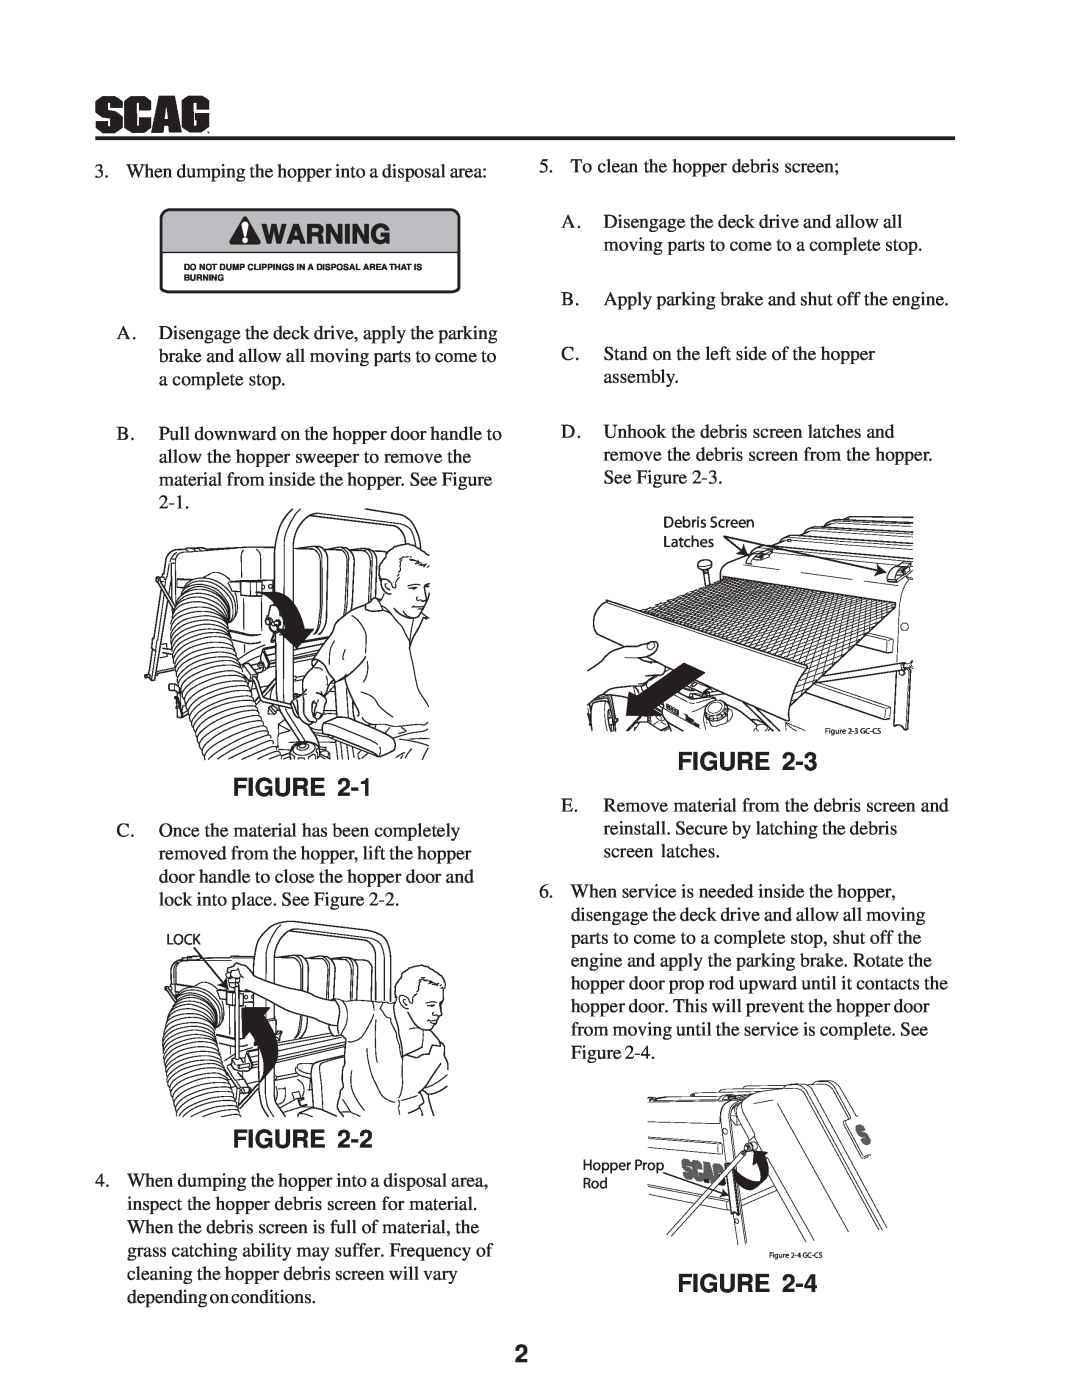 Scag Power Equipment GC-STT-CSV manual When dumping the hopper into a disposal area 